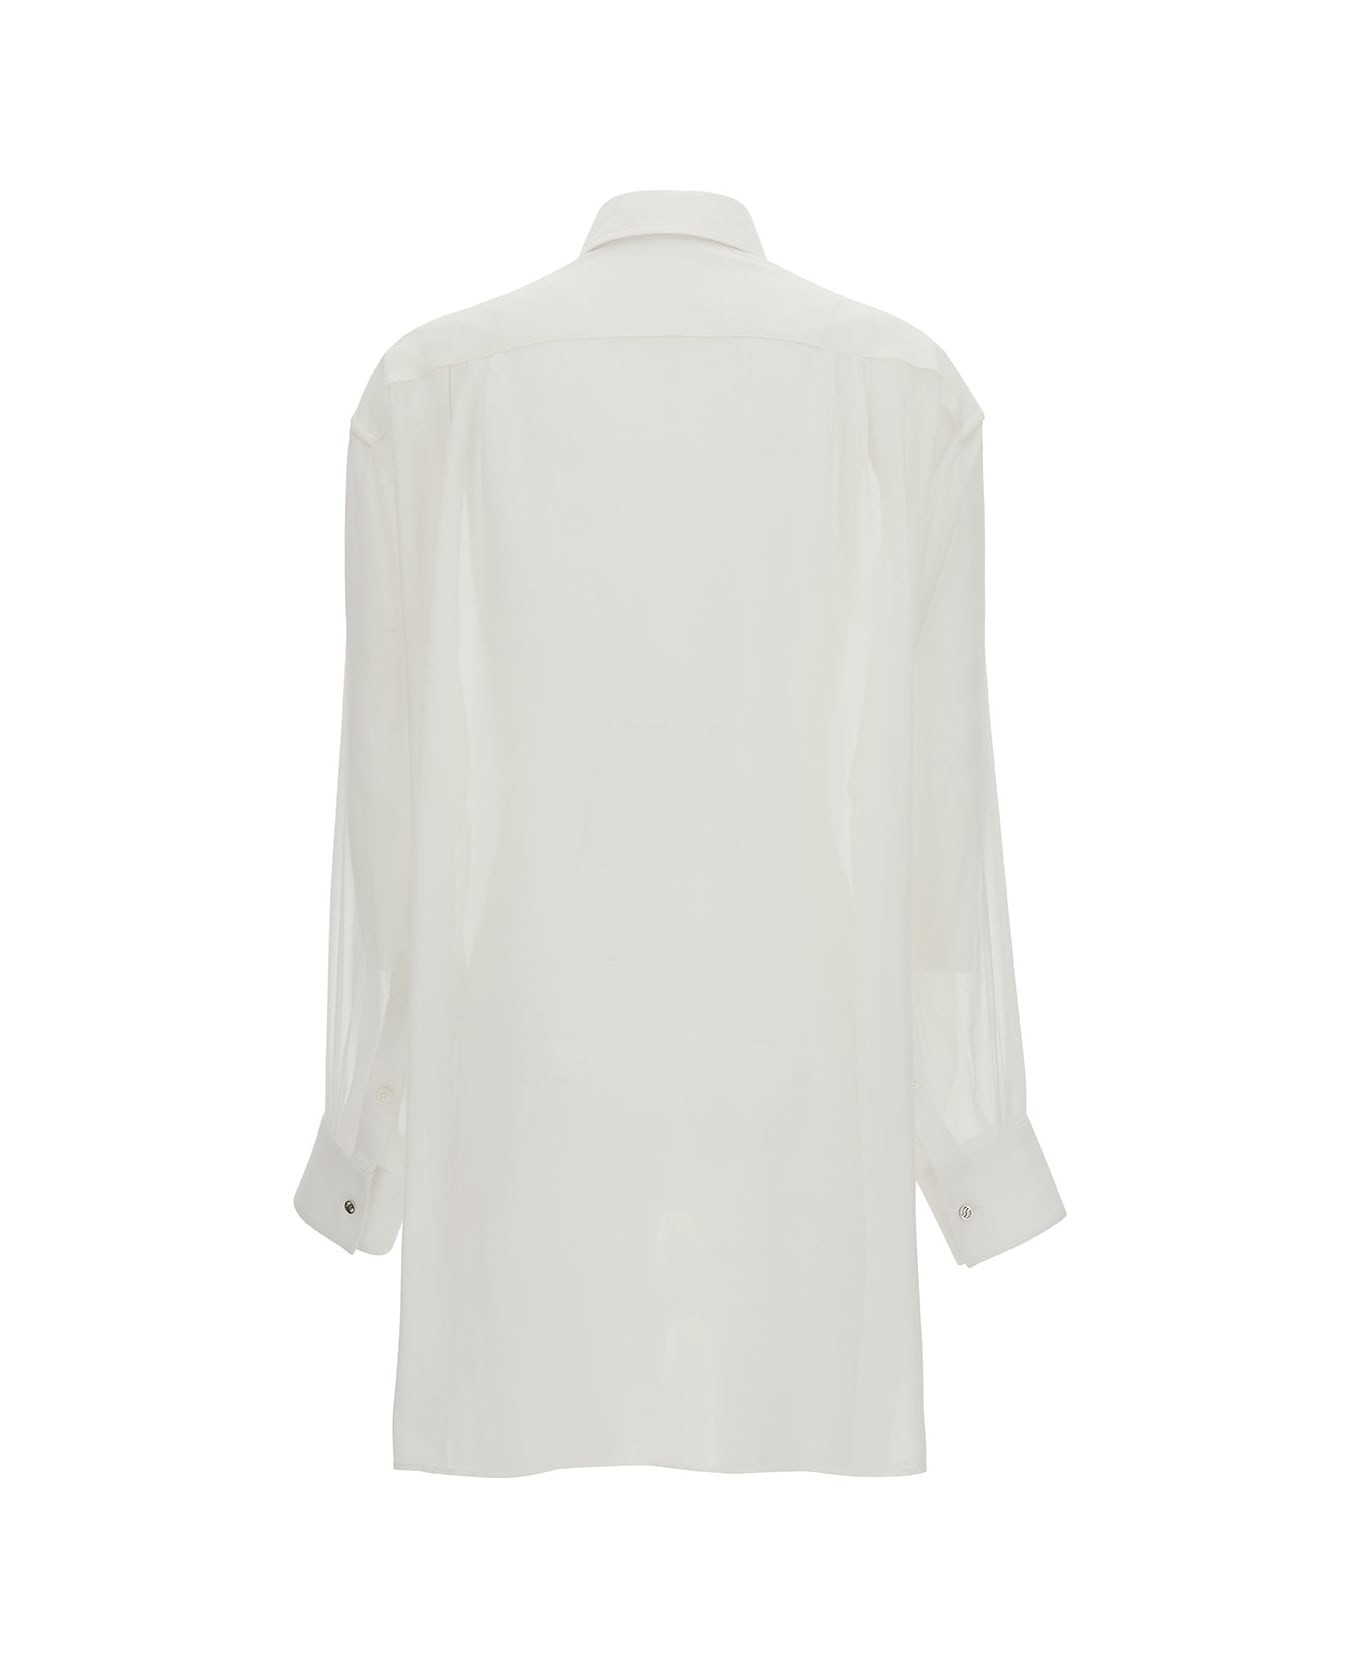 Stella McCartney Oversized White Tuxedo Shirt In Silk Woman - White シャツ